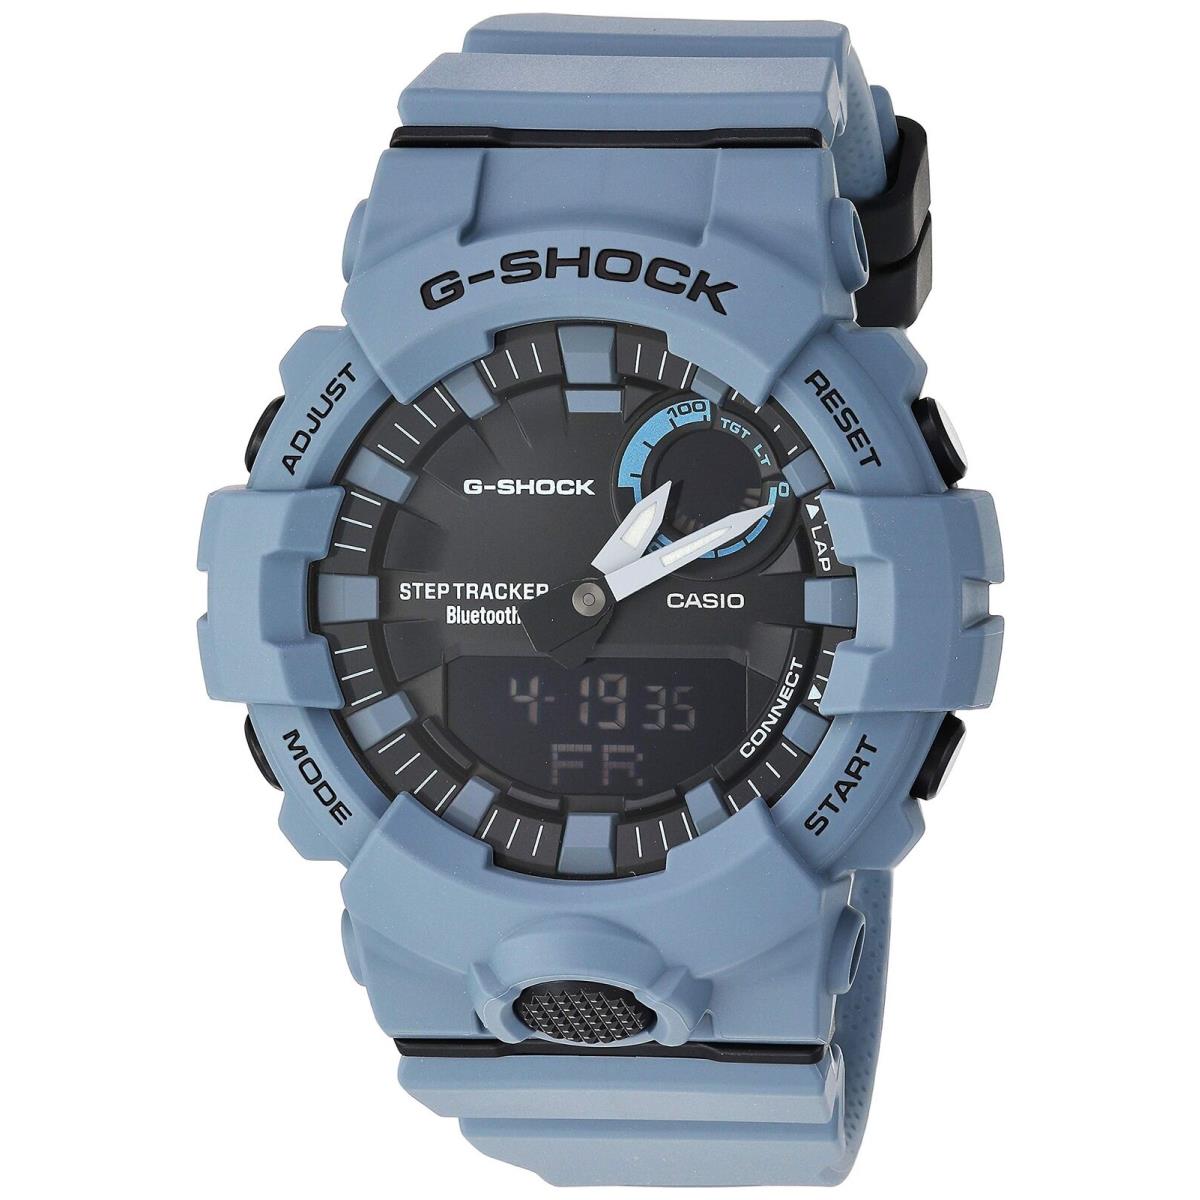 Casio G-shock Analog Digital Wrist Watch Step Tracker Bluetooth GBA800UC-2A